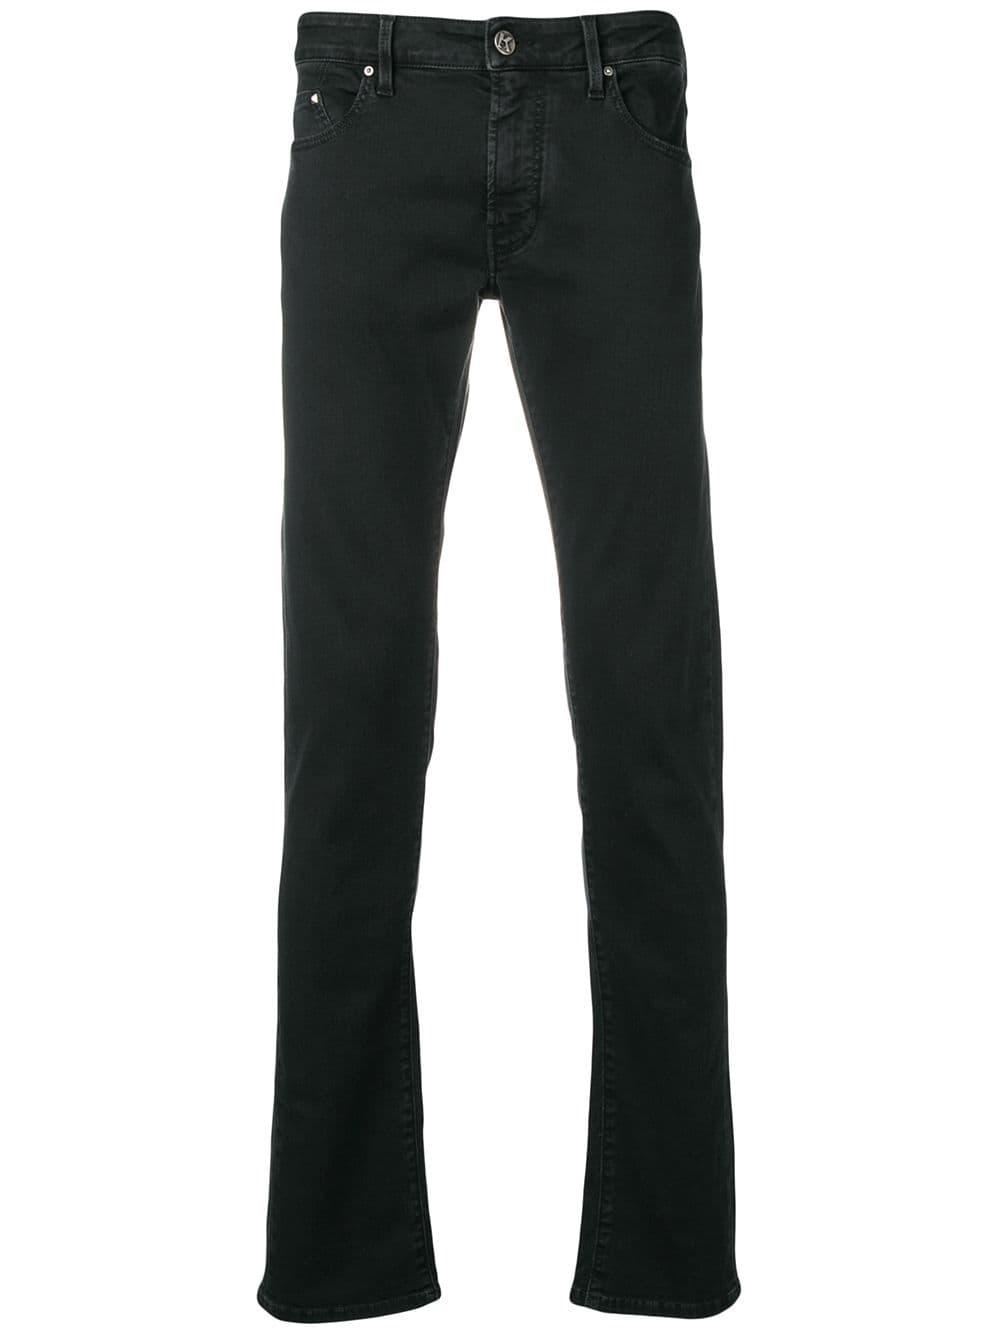 Karl Lagerfeld Denim Slim Fit Jeans in Black for Men - Lyst